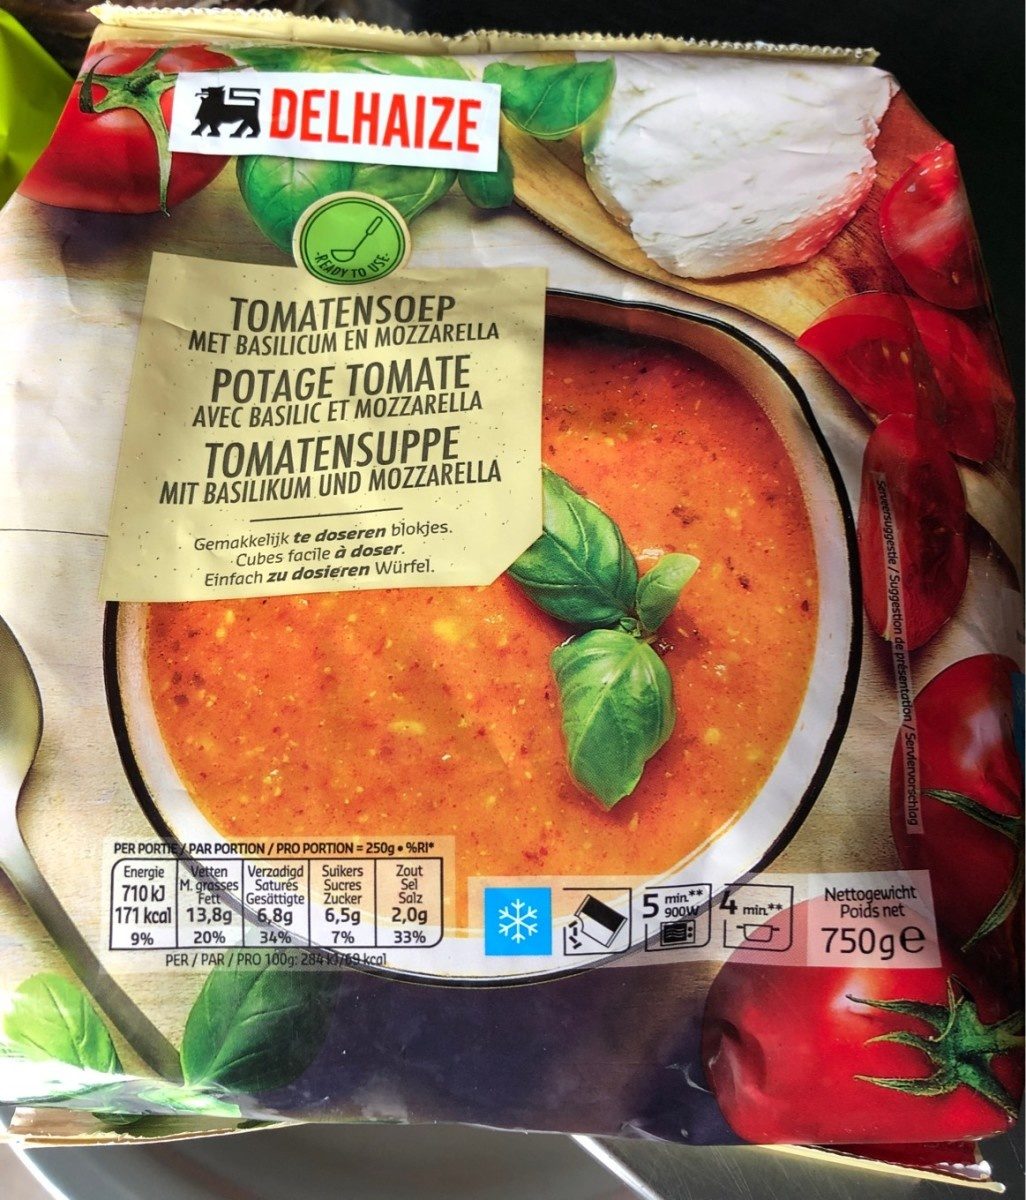 Tomatensoep met basilicum en mozzarella - Product - fr